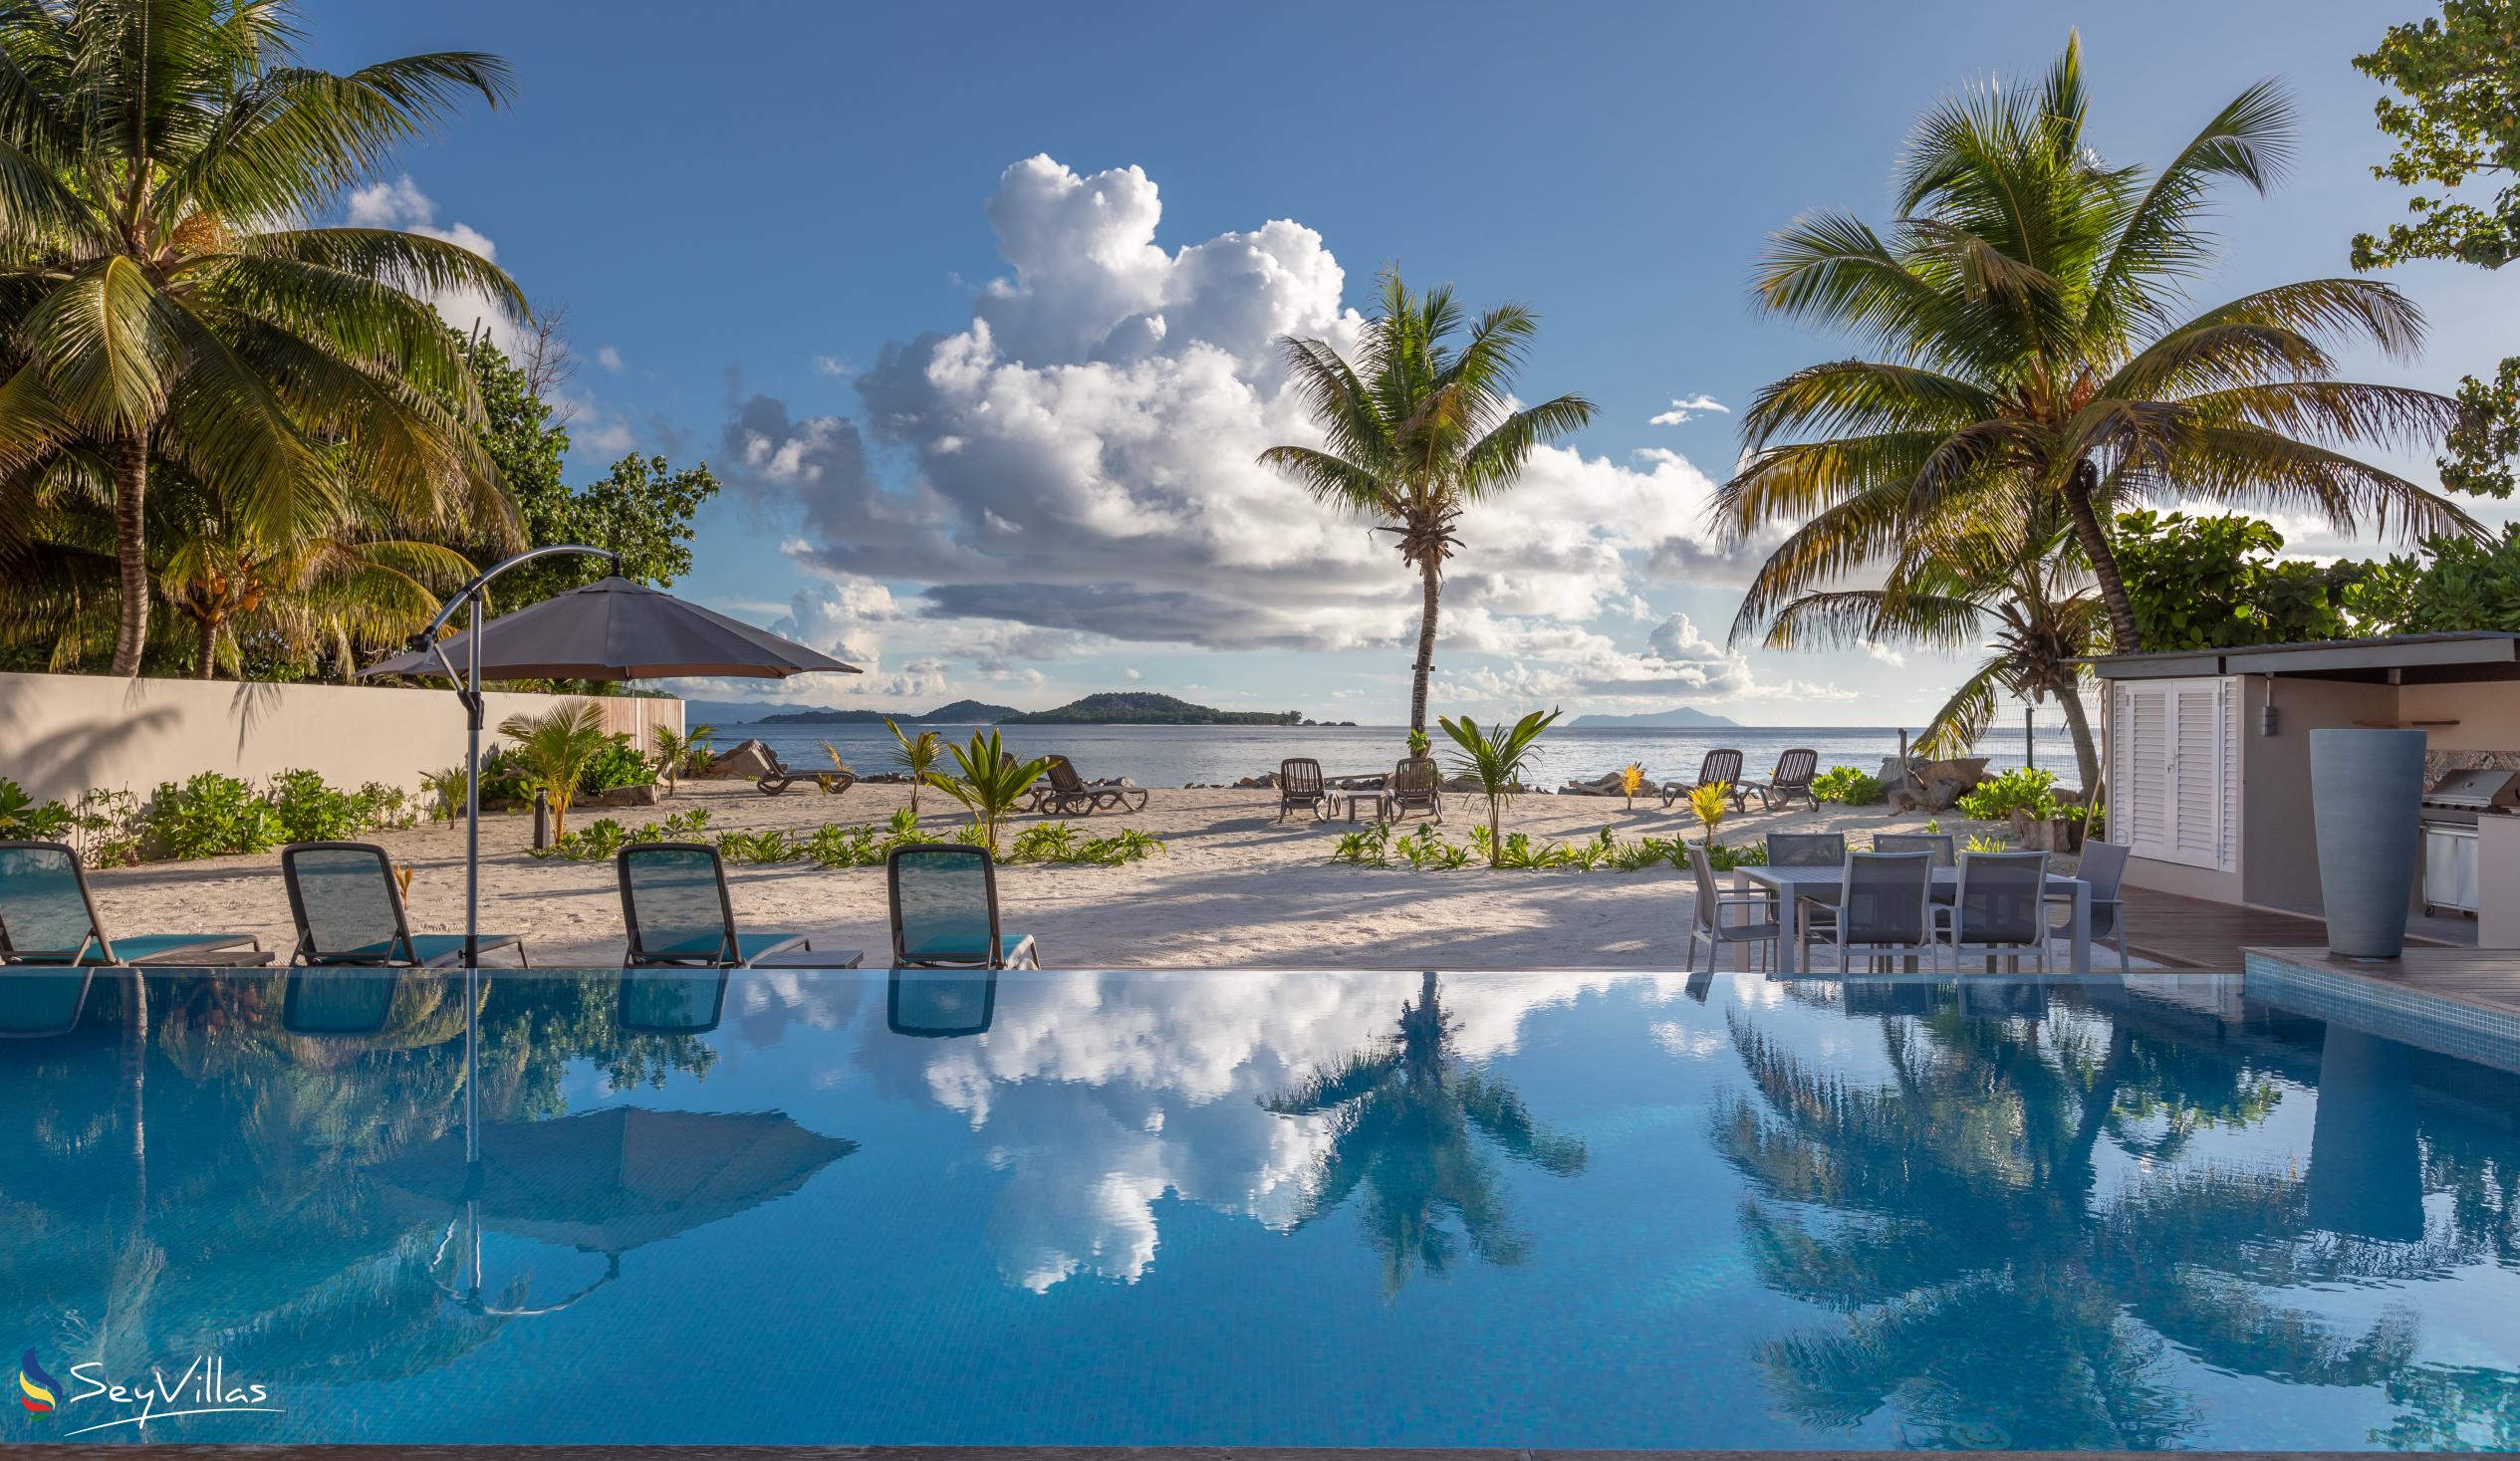 Foto 48: Villas Coco Beach - La Maison Villas Coco Beach - Praslin (Seychellen)